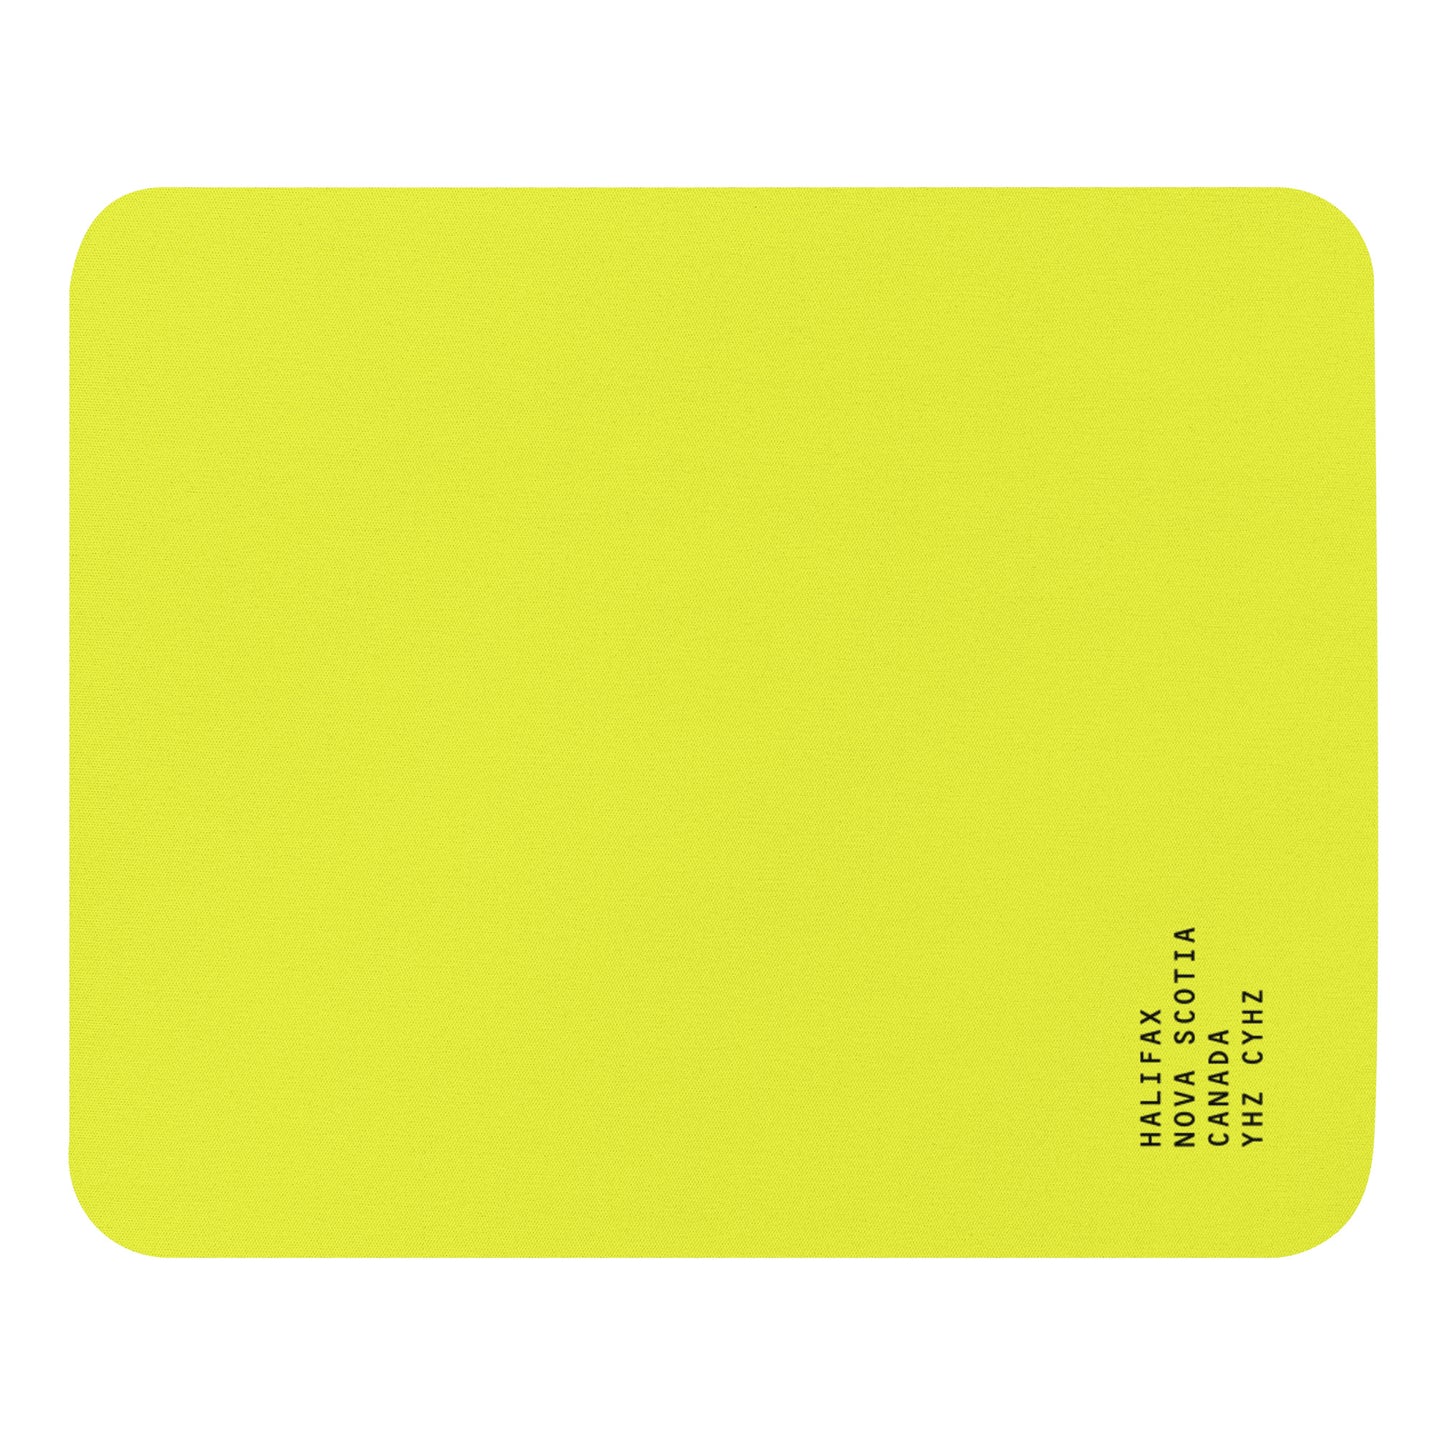 YHM Designs - YHZ Halifax Mouse Pad - Retro-Tech Design - Bright Yellow - Image 01